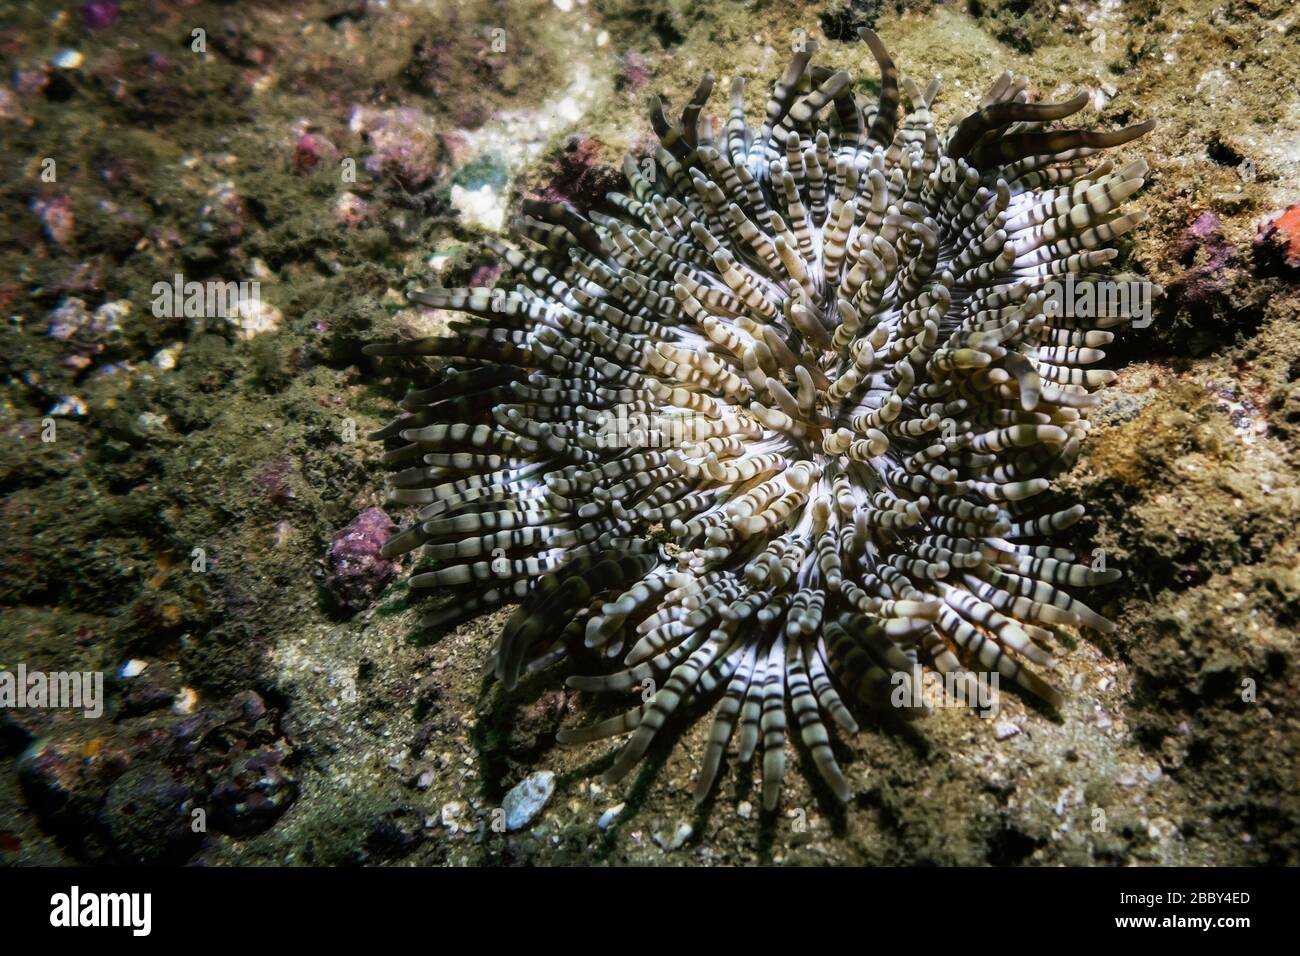 Closeup of beaded anemone (Heteractis aurora) living on sea floor, next to coral reef, Gulf of Oman, Indian Ocean, Arabian Peninsula, Middle East Stock Photo